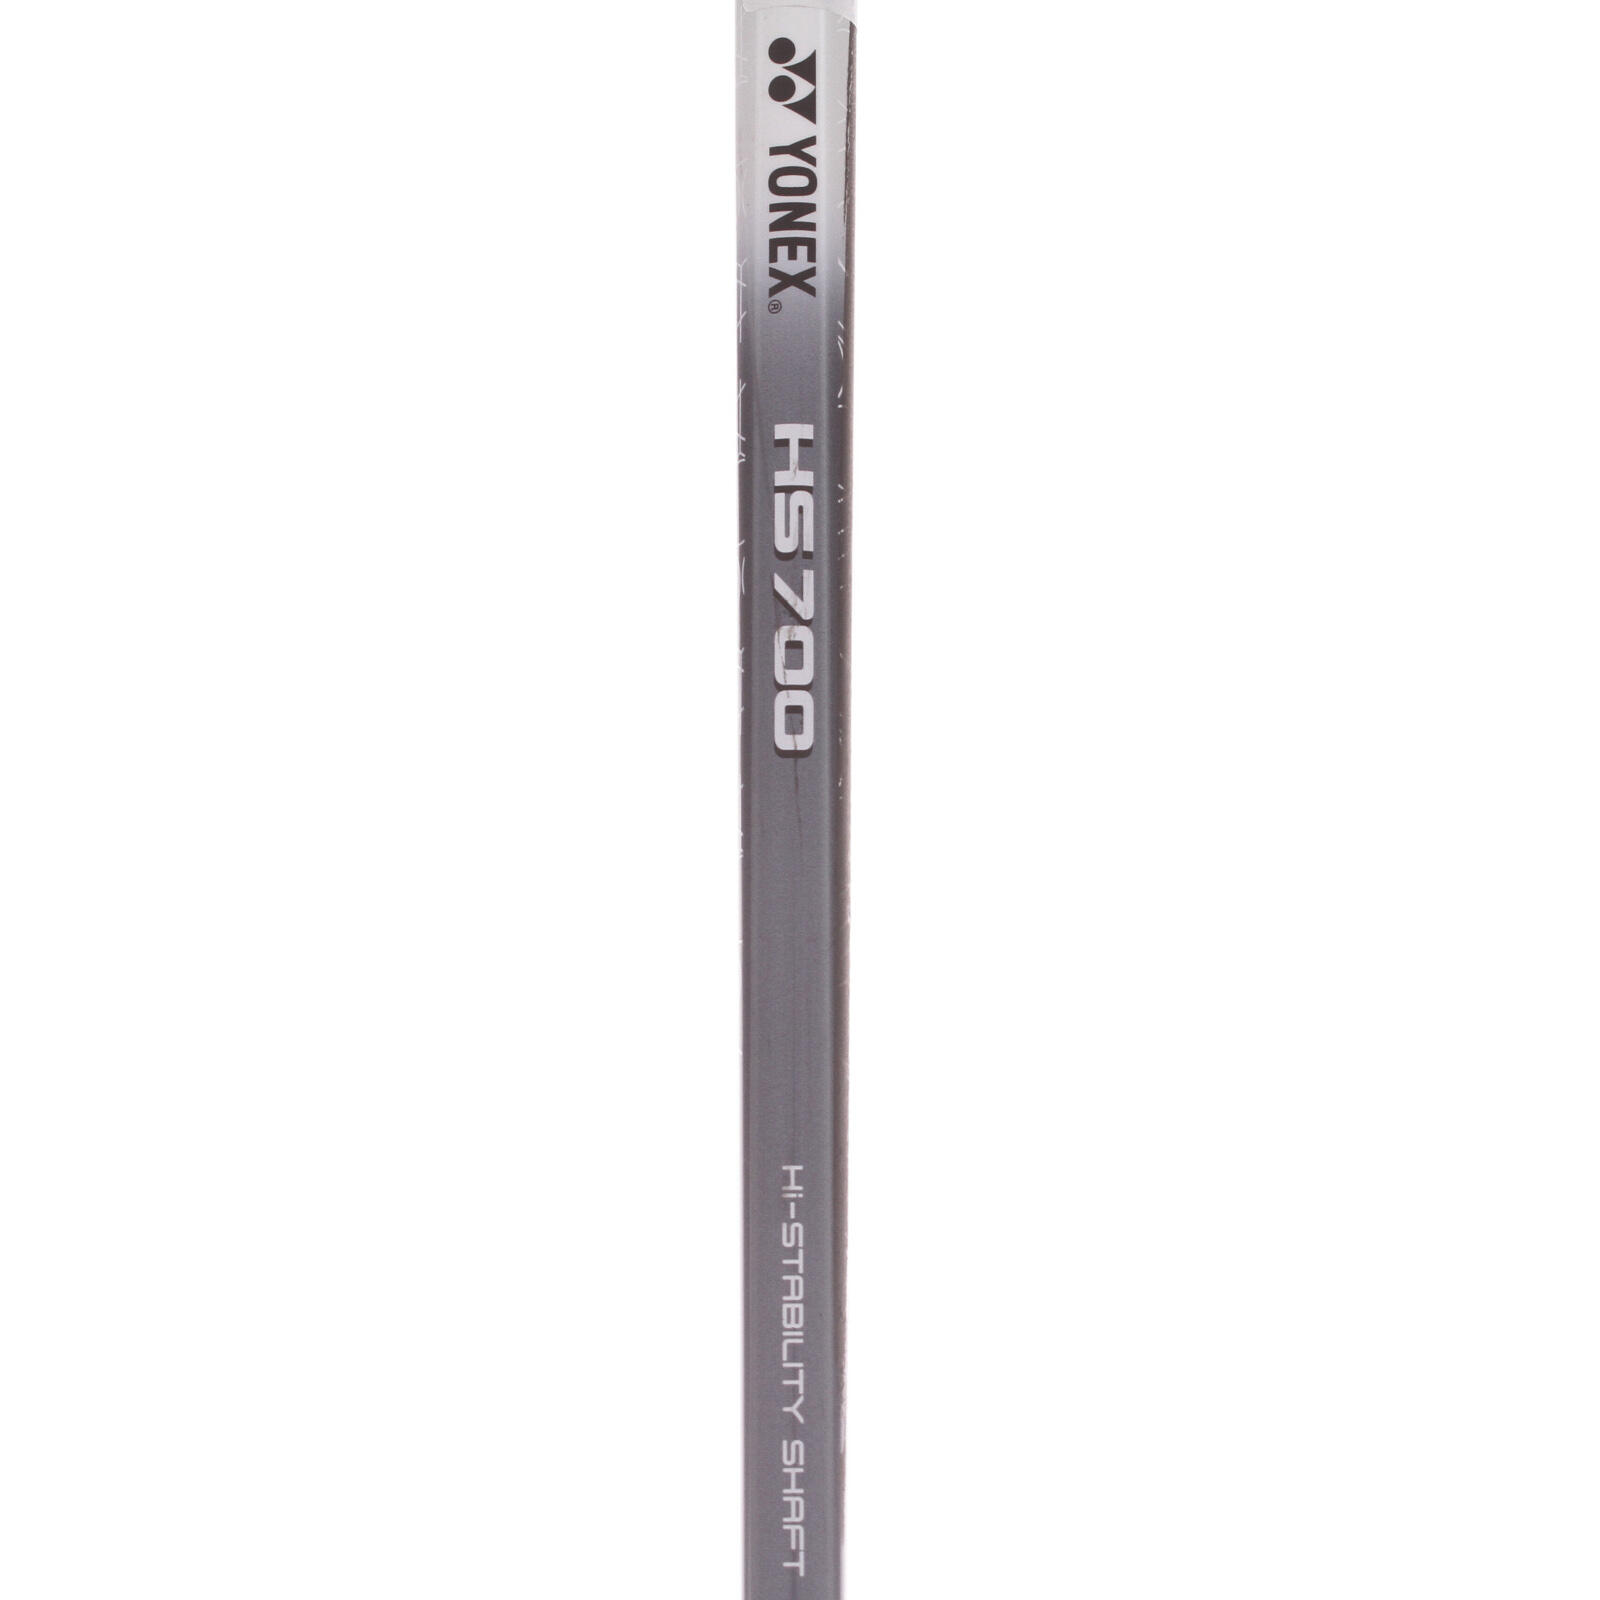 USED - 6-Iron Yonex VMS Graphite Shaft SuperLight Flex Right Handed - GRADE B 4/5